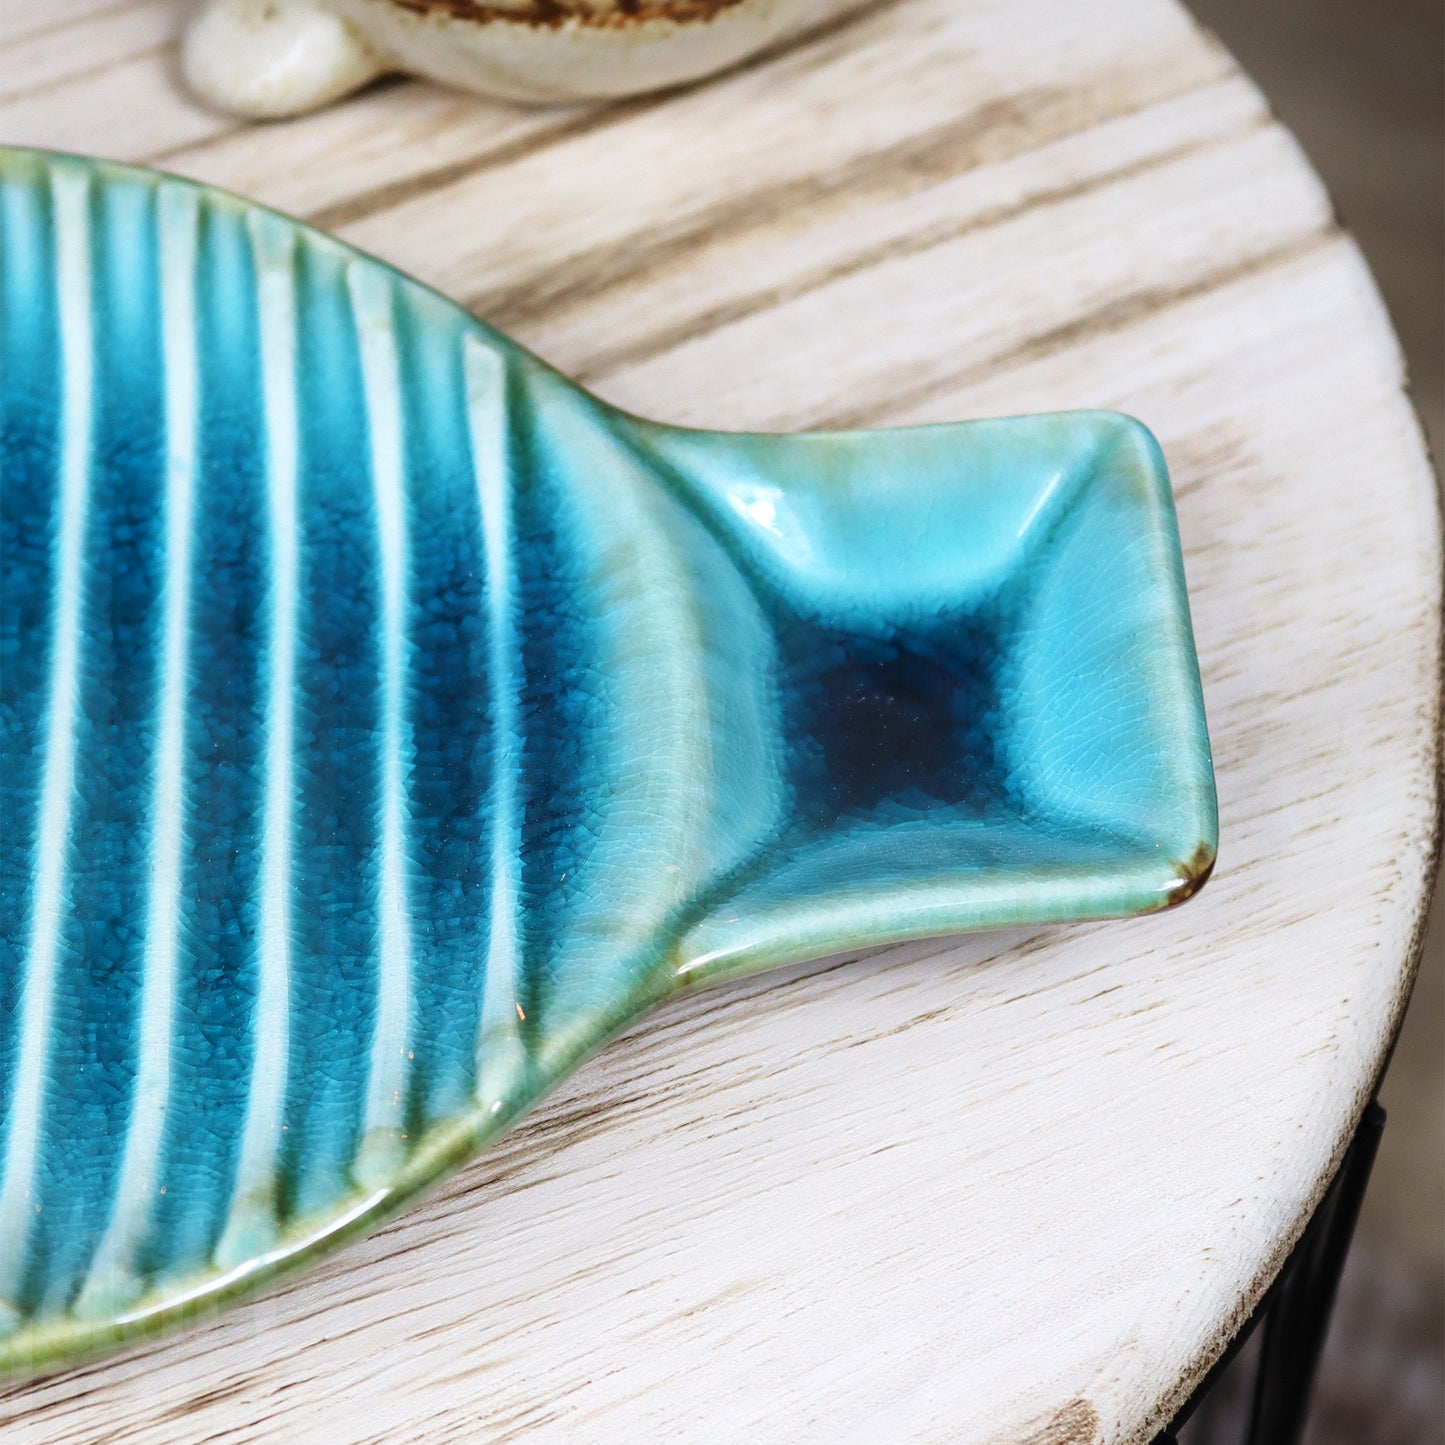 Teal Blue Fish Decorative Plate